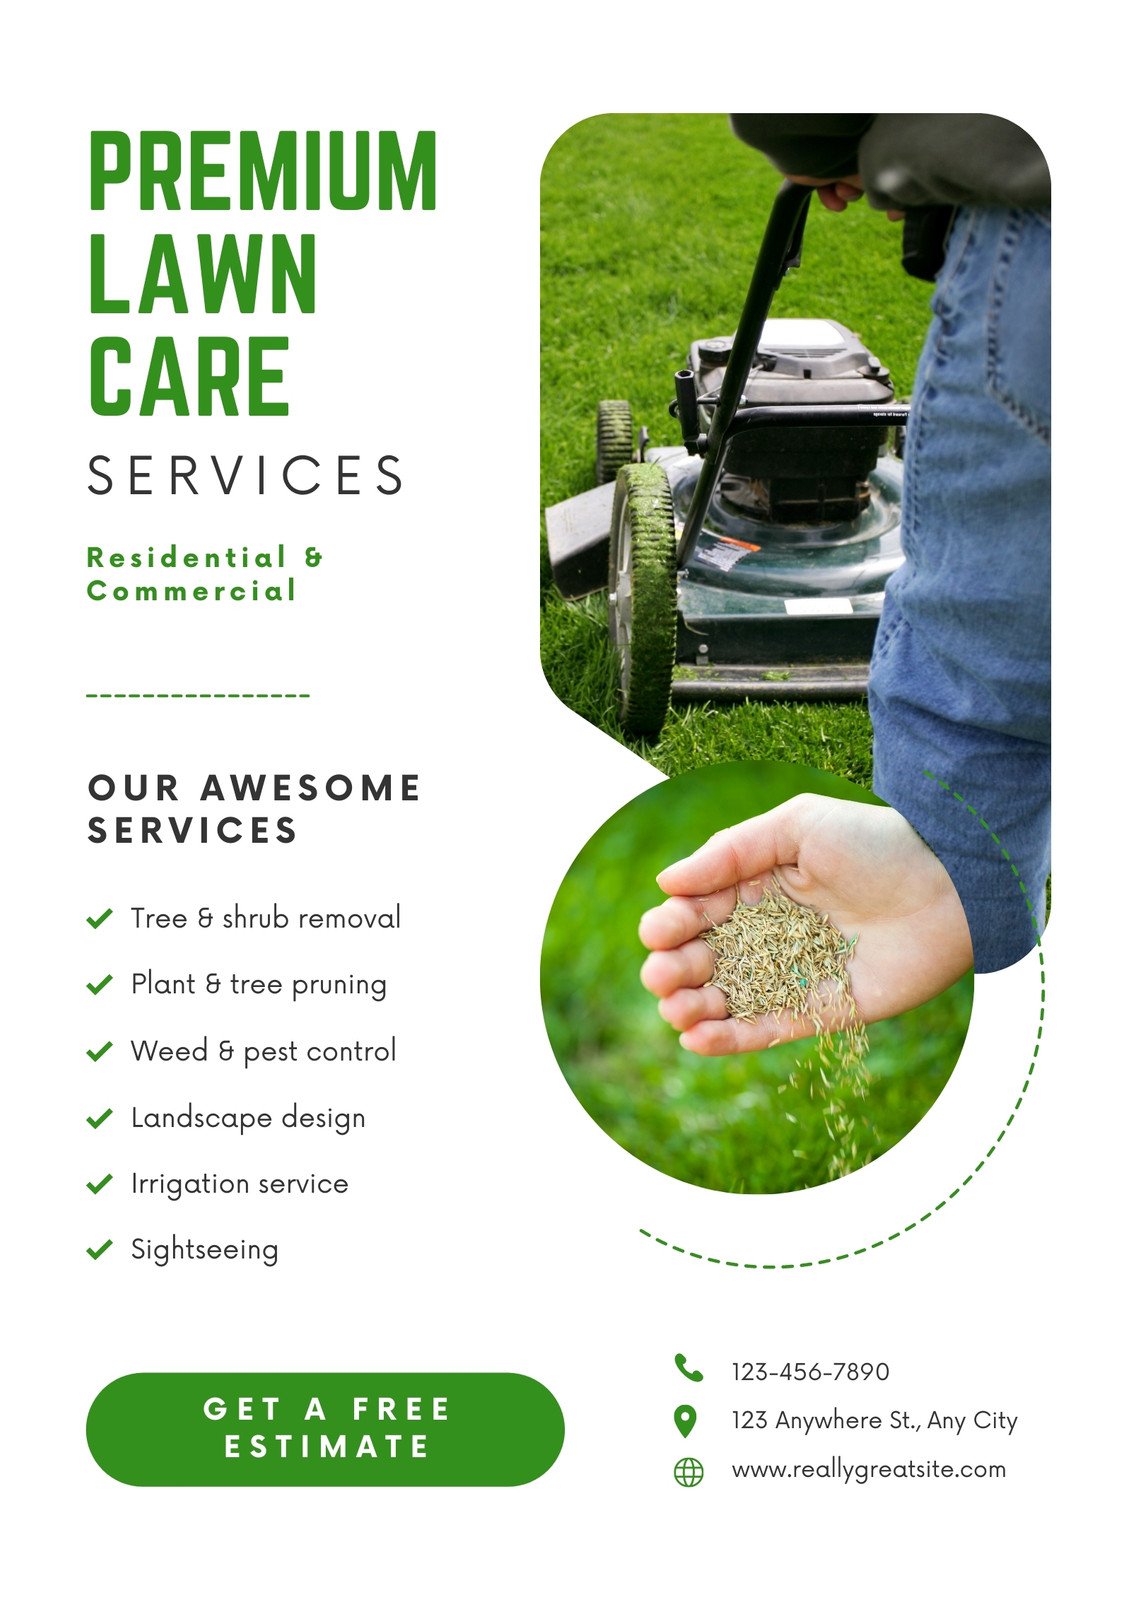 lawn care template